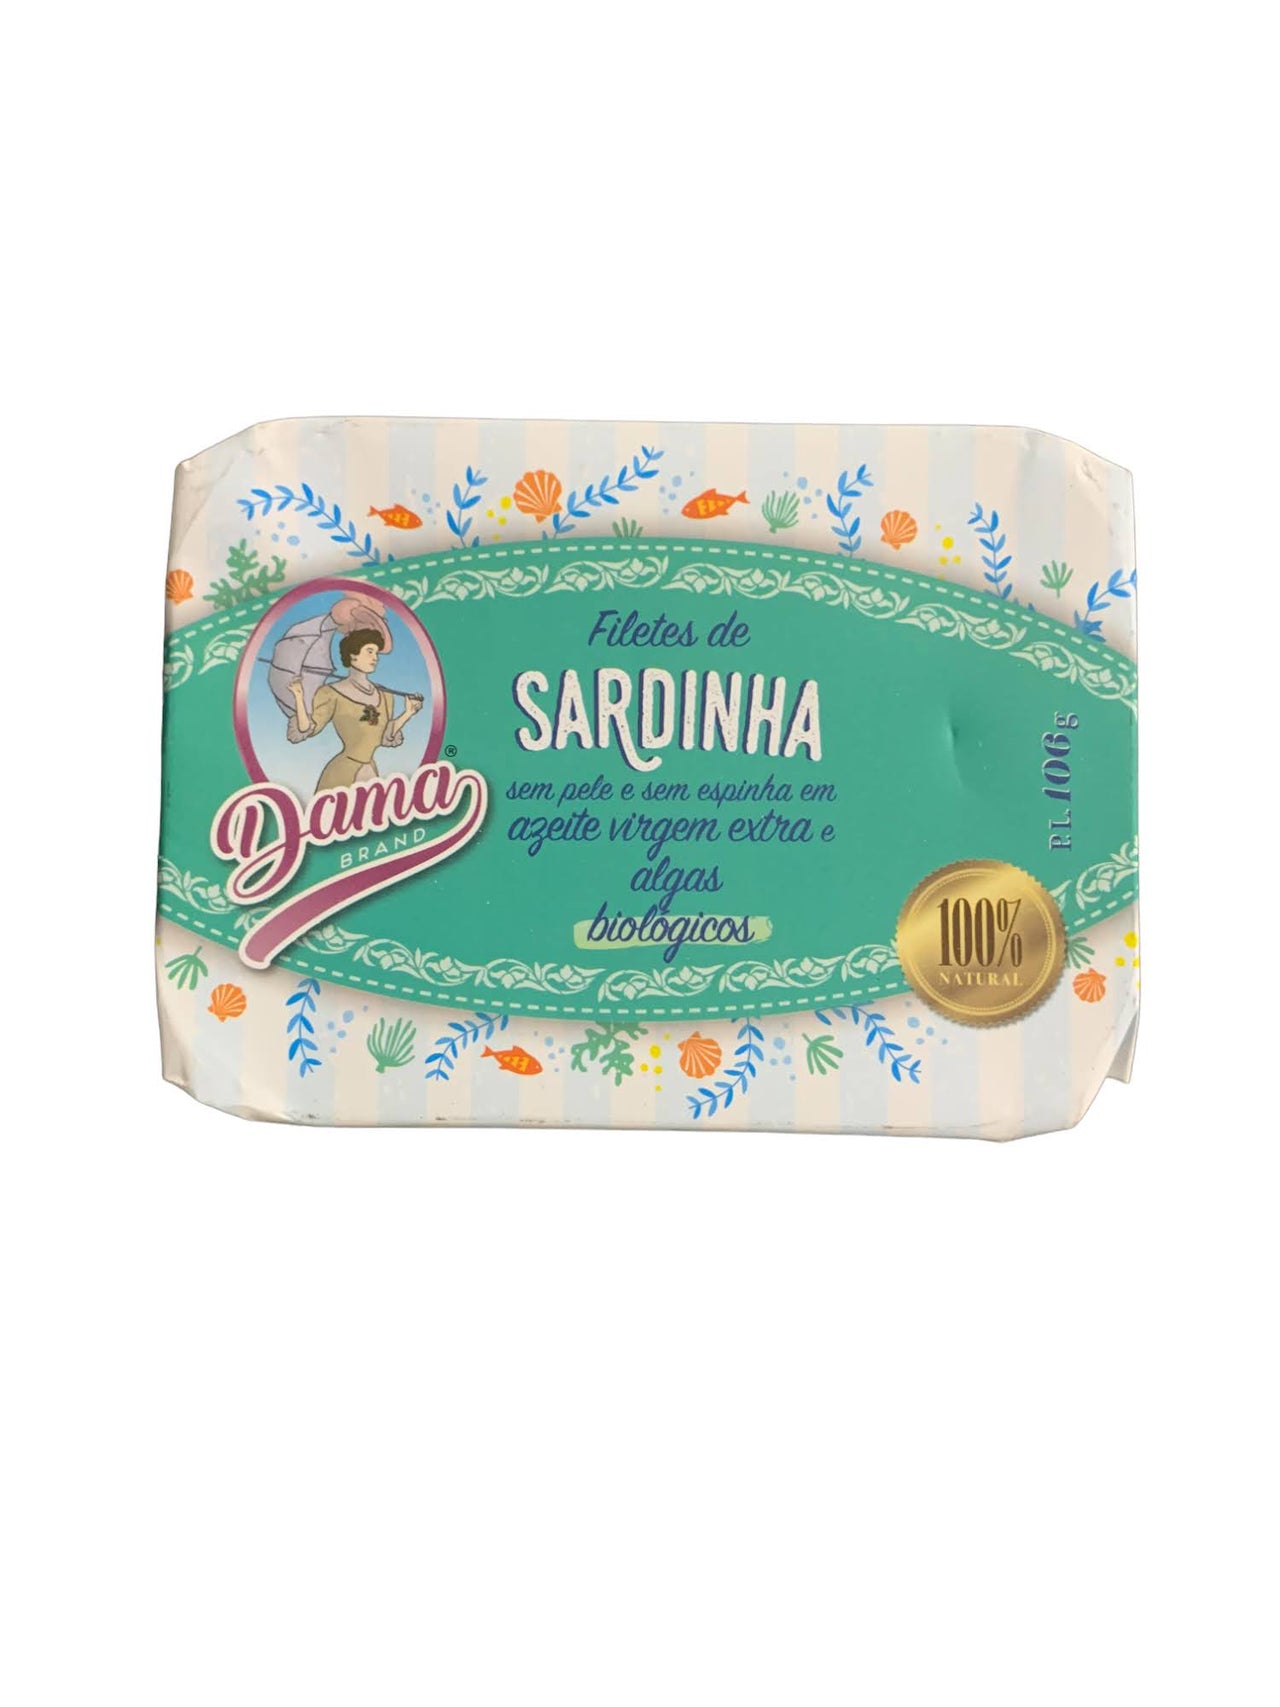 Dama Brand Sardine Fillets Skinless and Boneless in Organic EVOO and Seaweeds - 3 Pack - TinCanFish